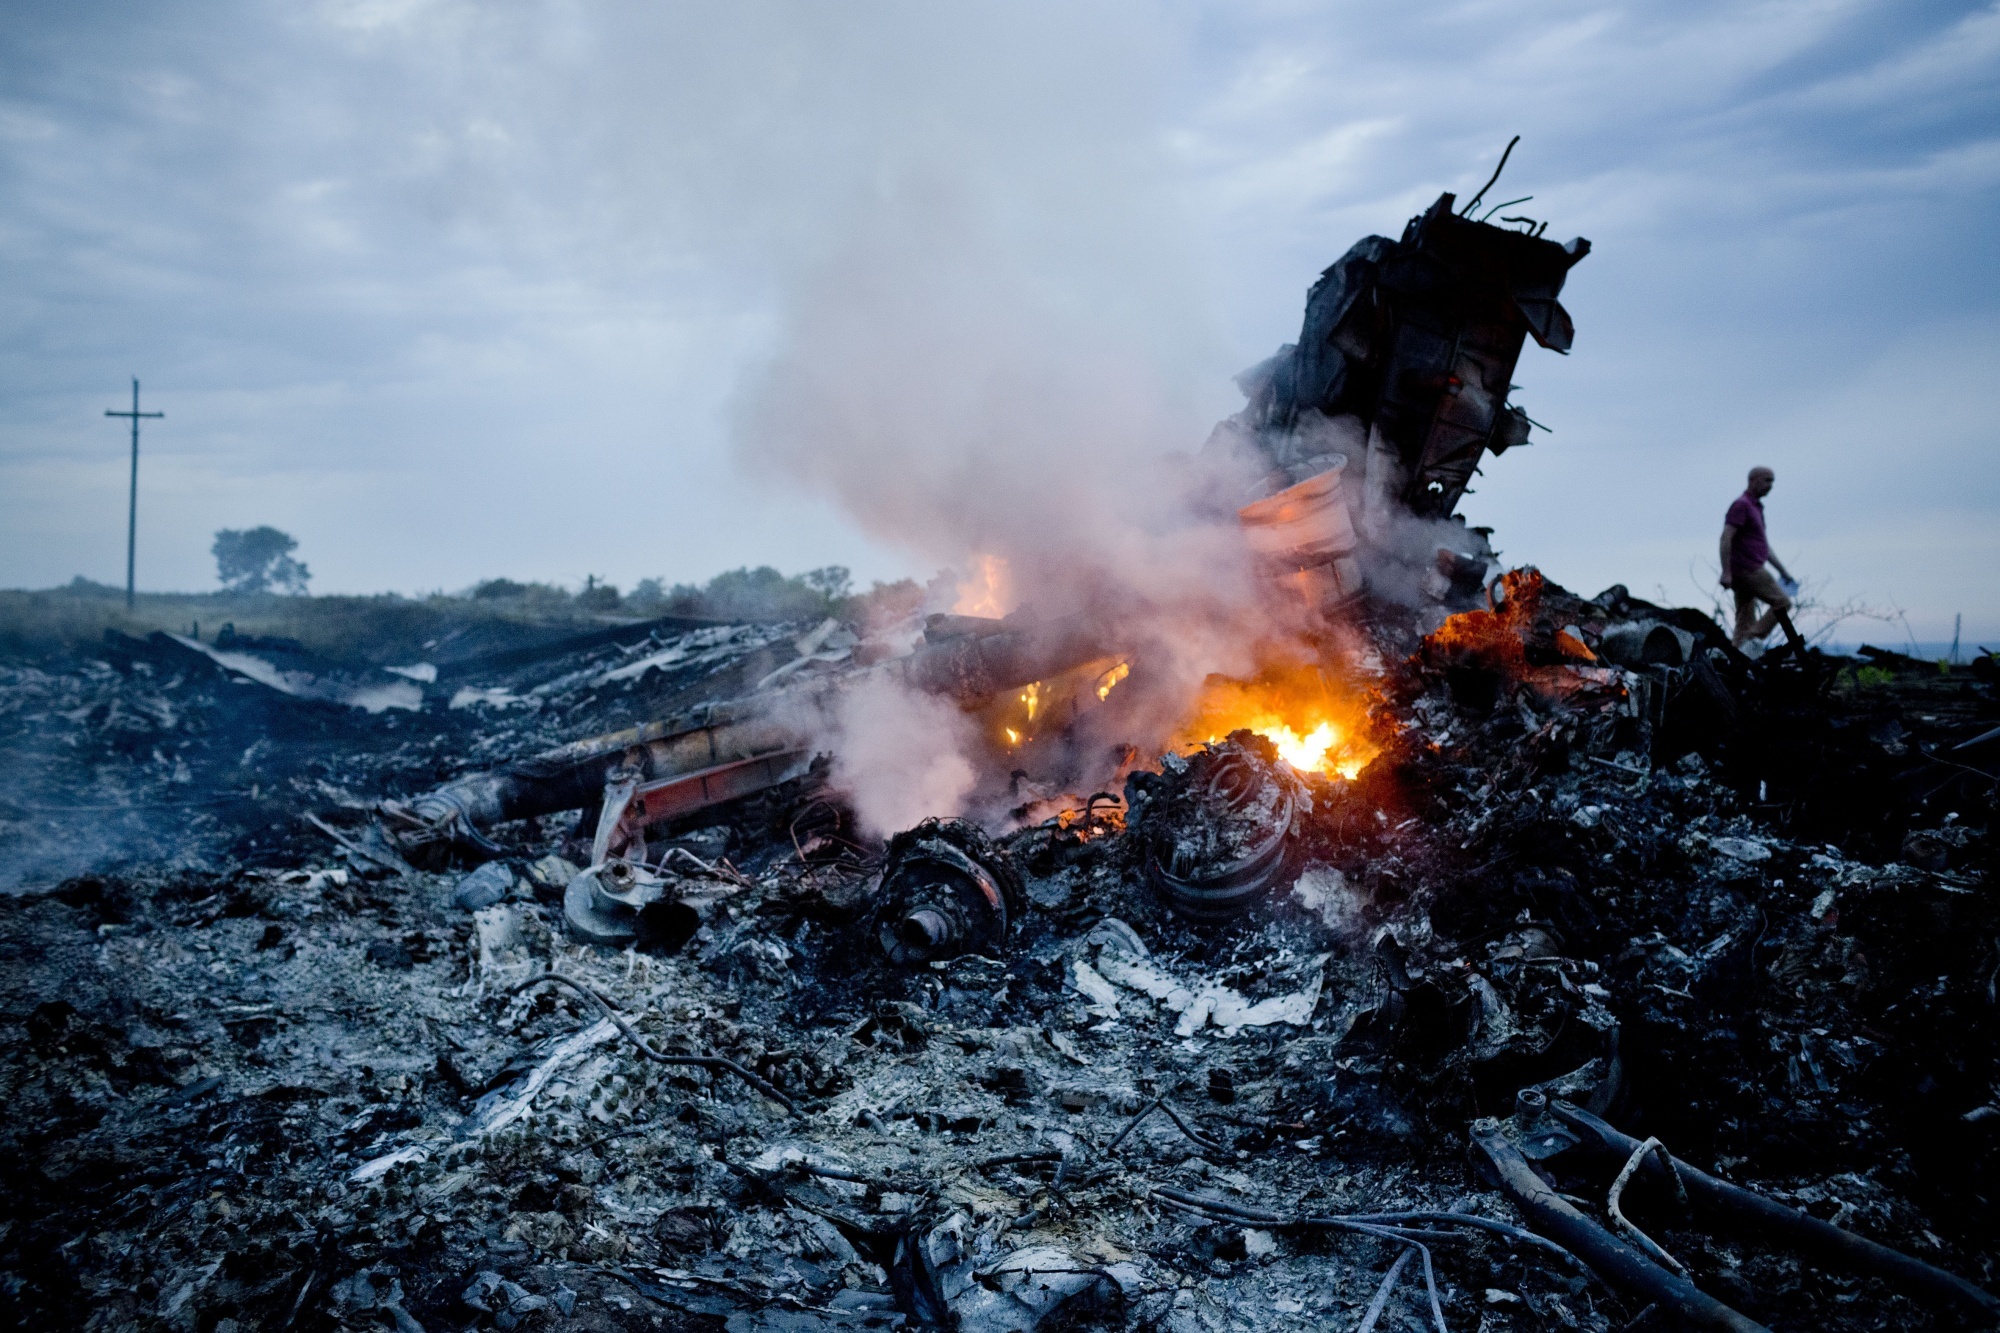 Debris from MH 17 in Ukraine in July 2014.